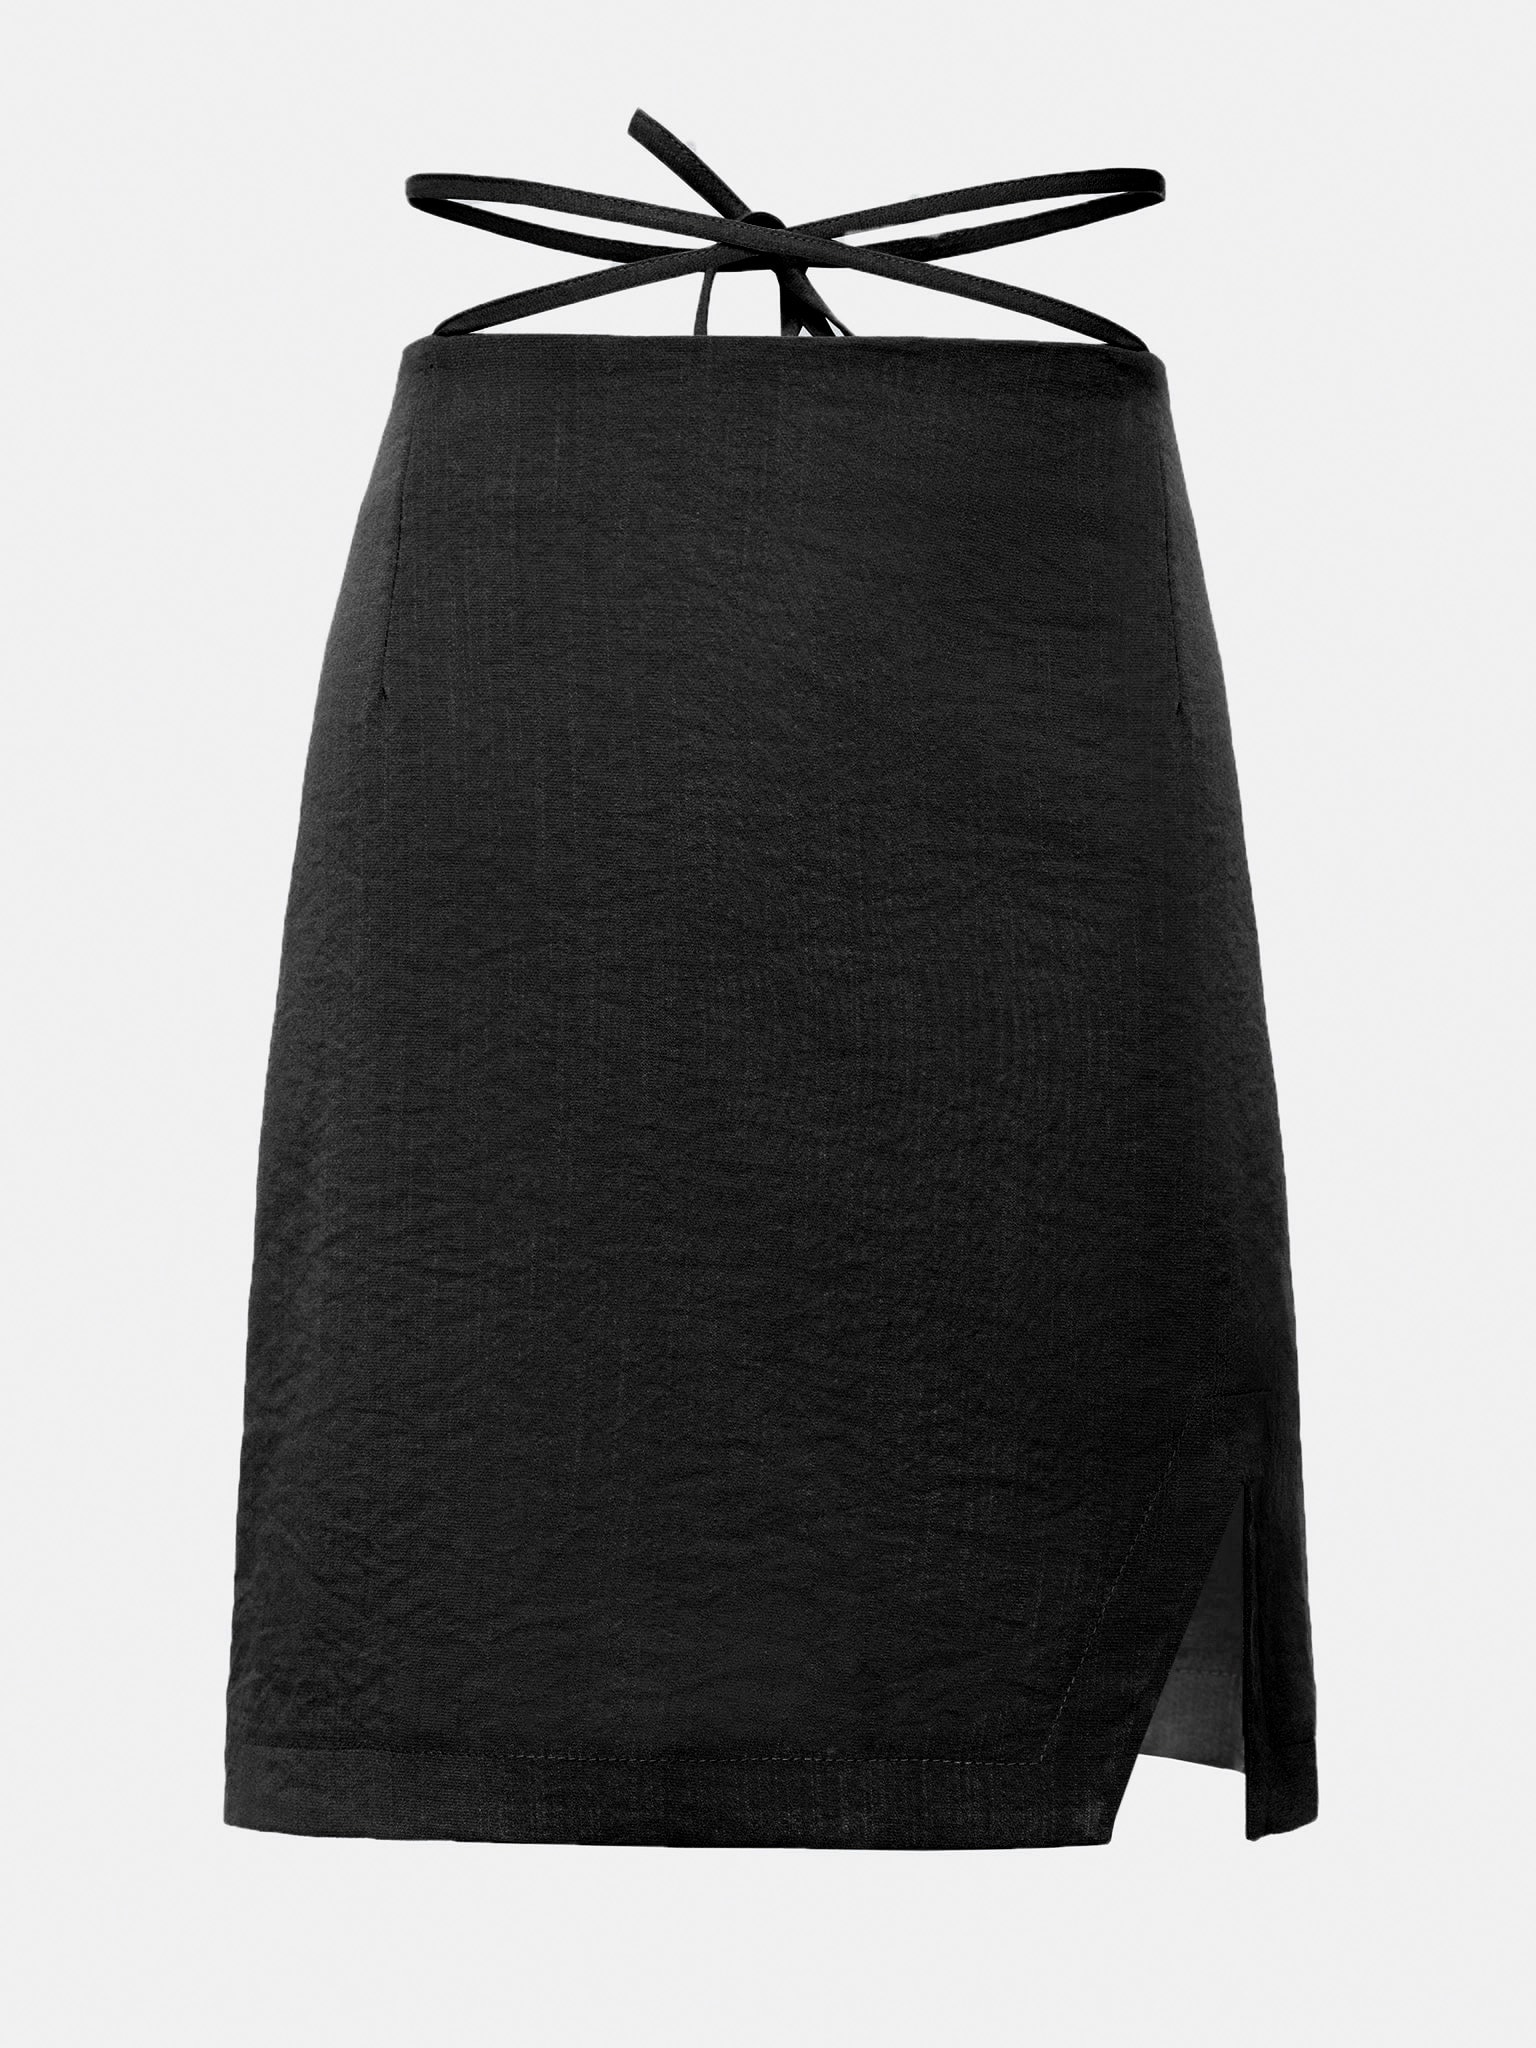 Прямая юбка мини с завязками на талии